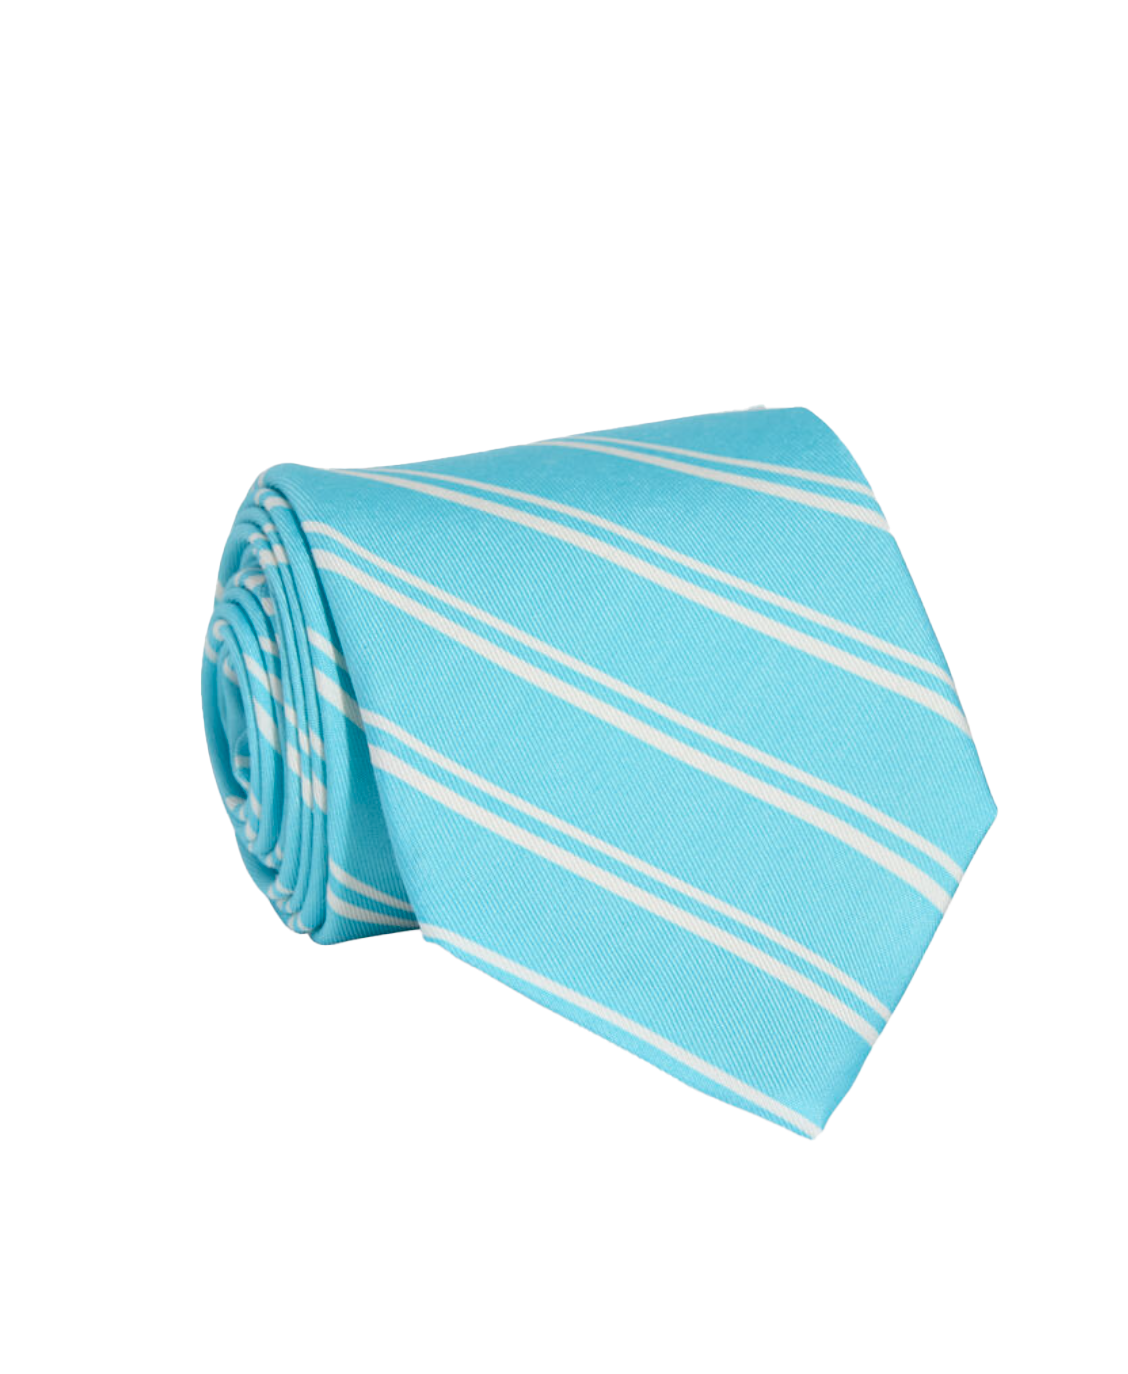 Compo Stripe Printed Tie Mist Blue